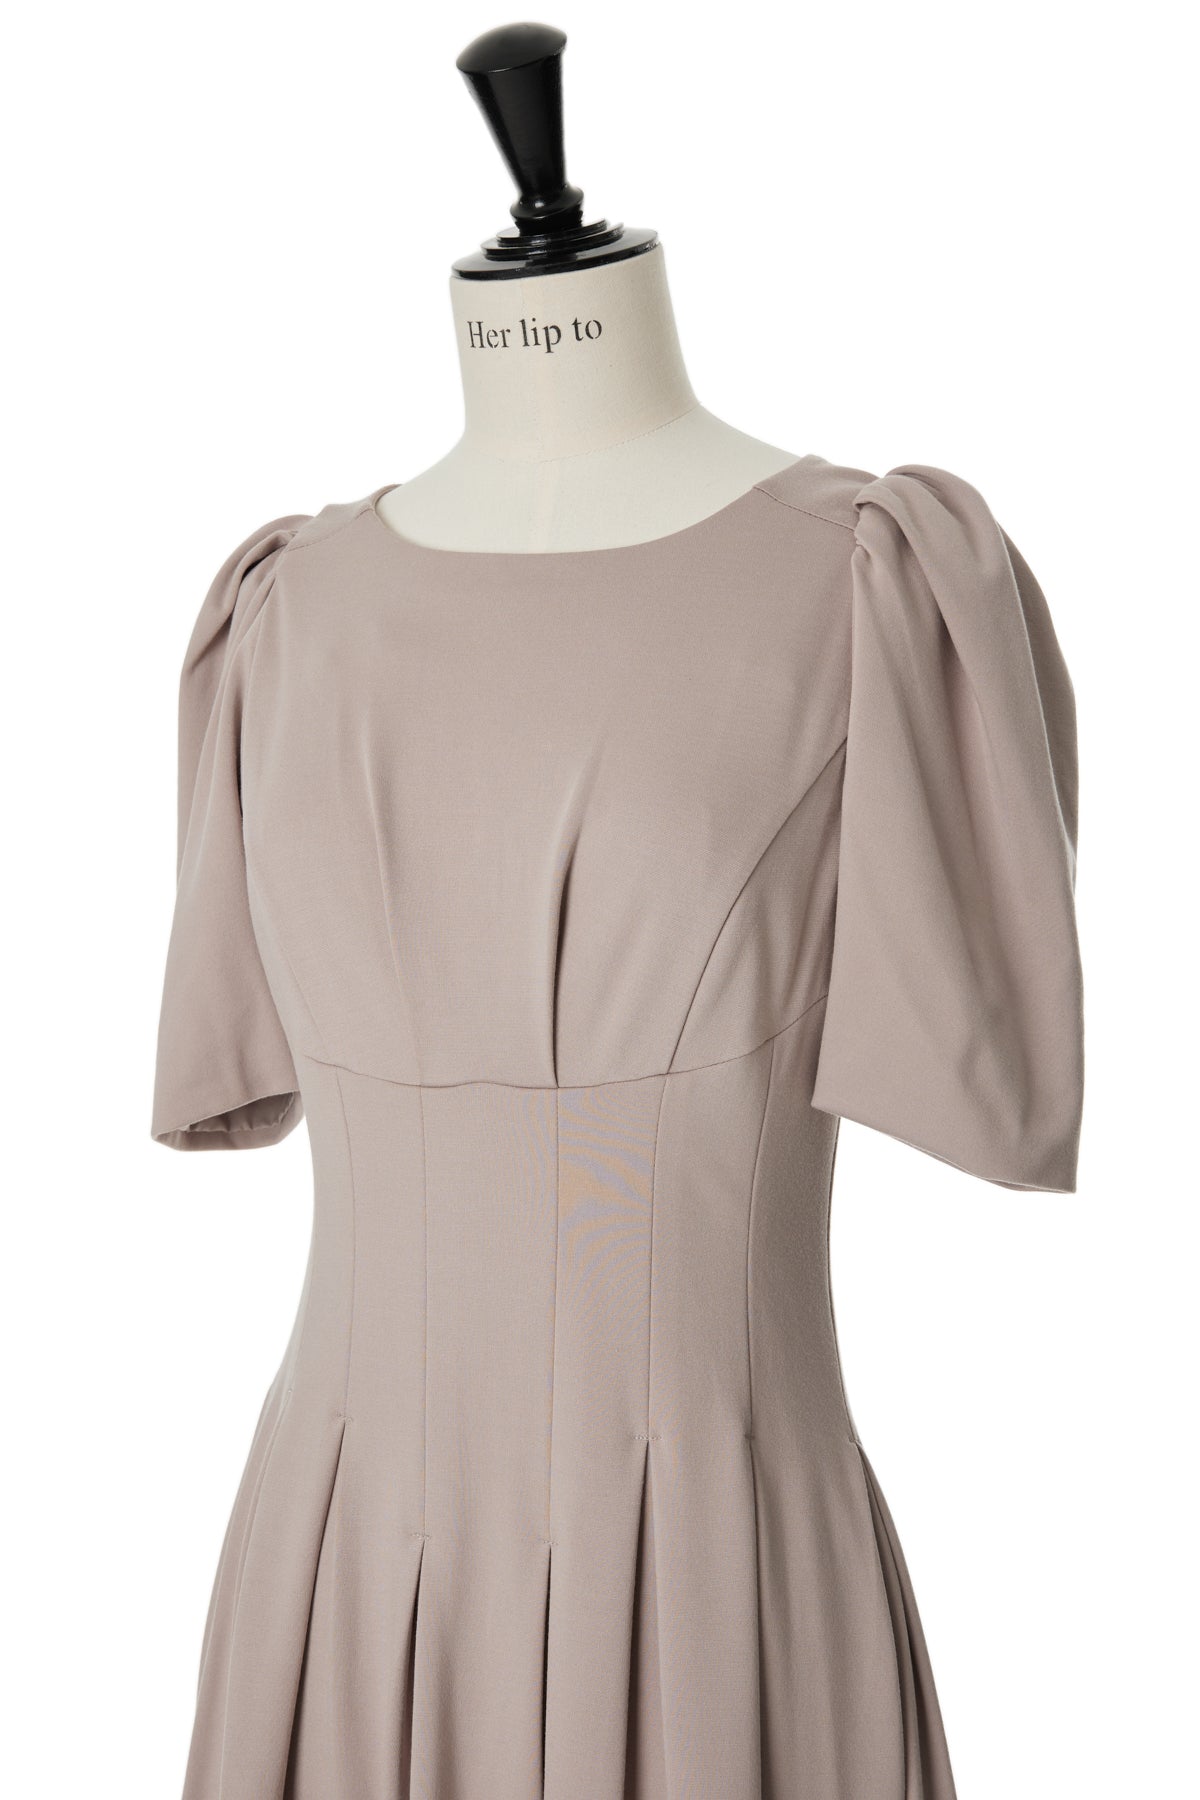 herlipto Marylebone Short-Sleeve Dress - ワンピース